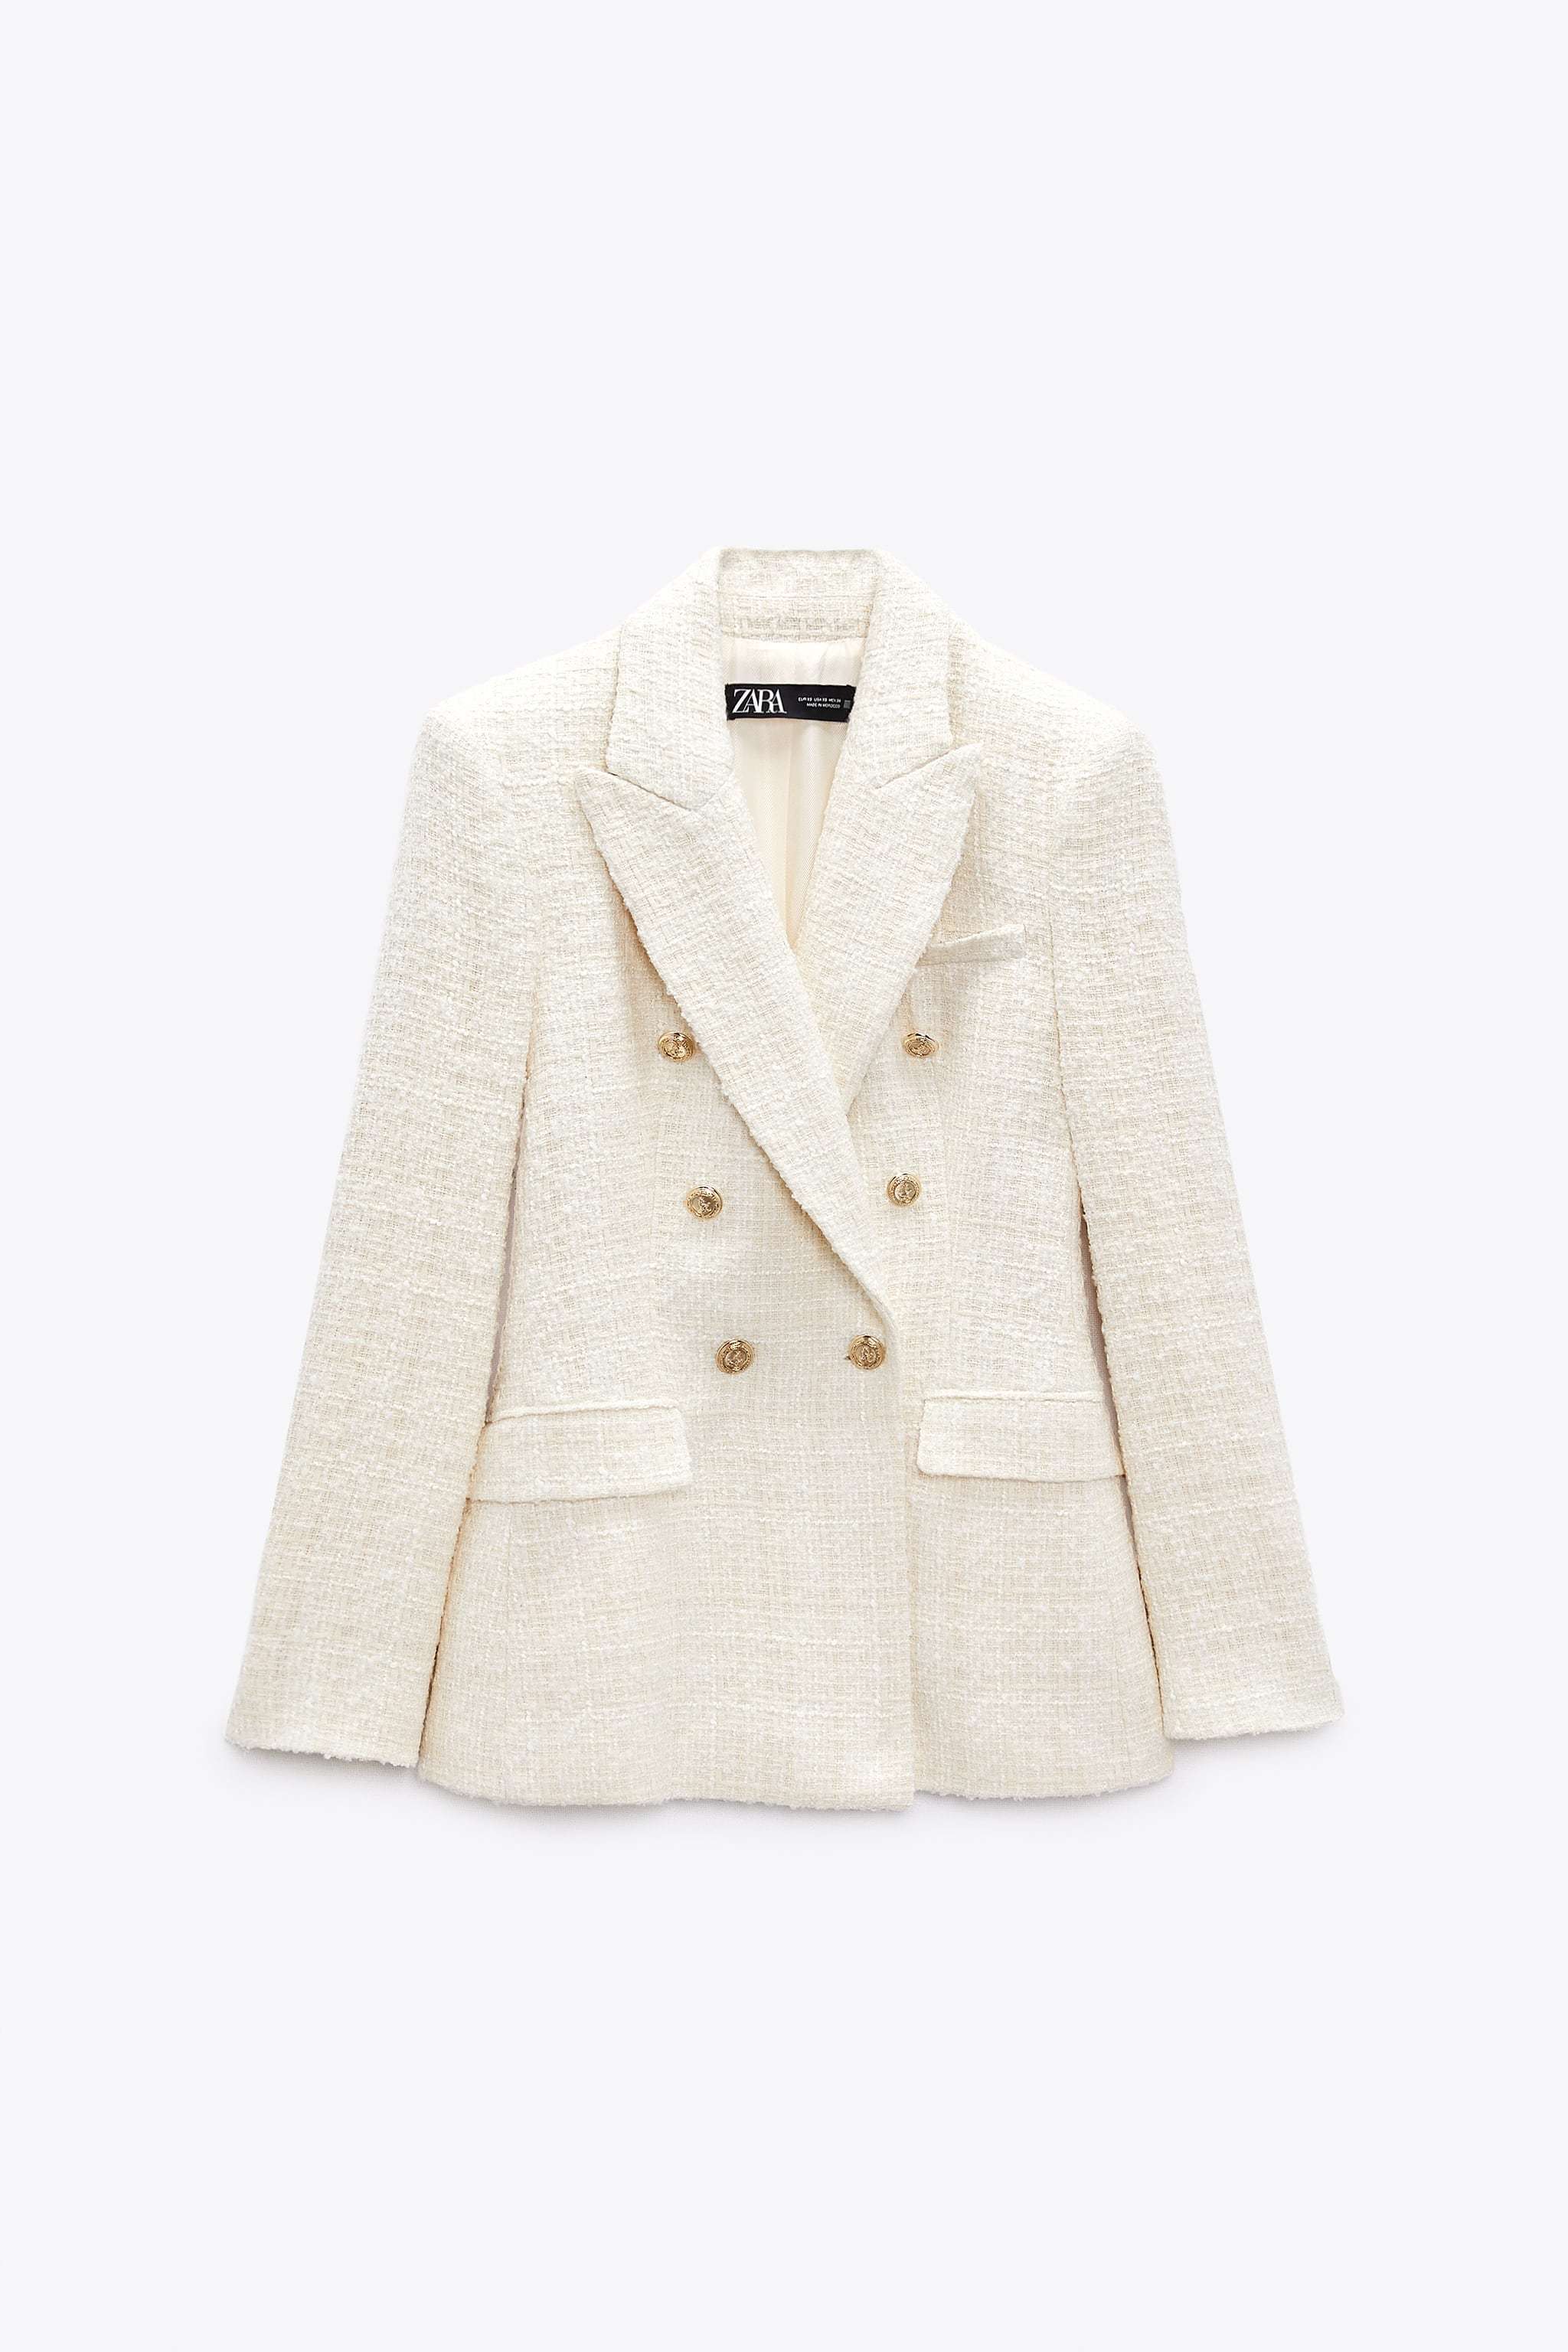 Chaqueta de tweed de Zara (55,95 euros).